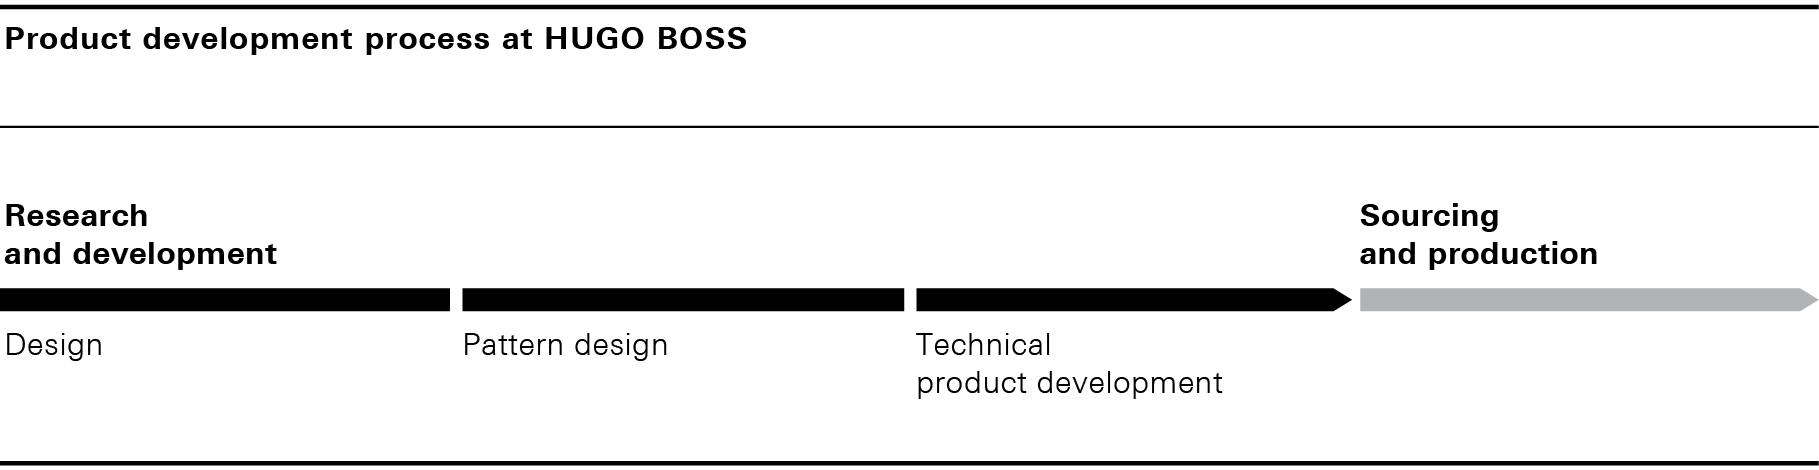 Product development process at HUGO BOSS (graphic)